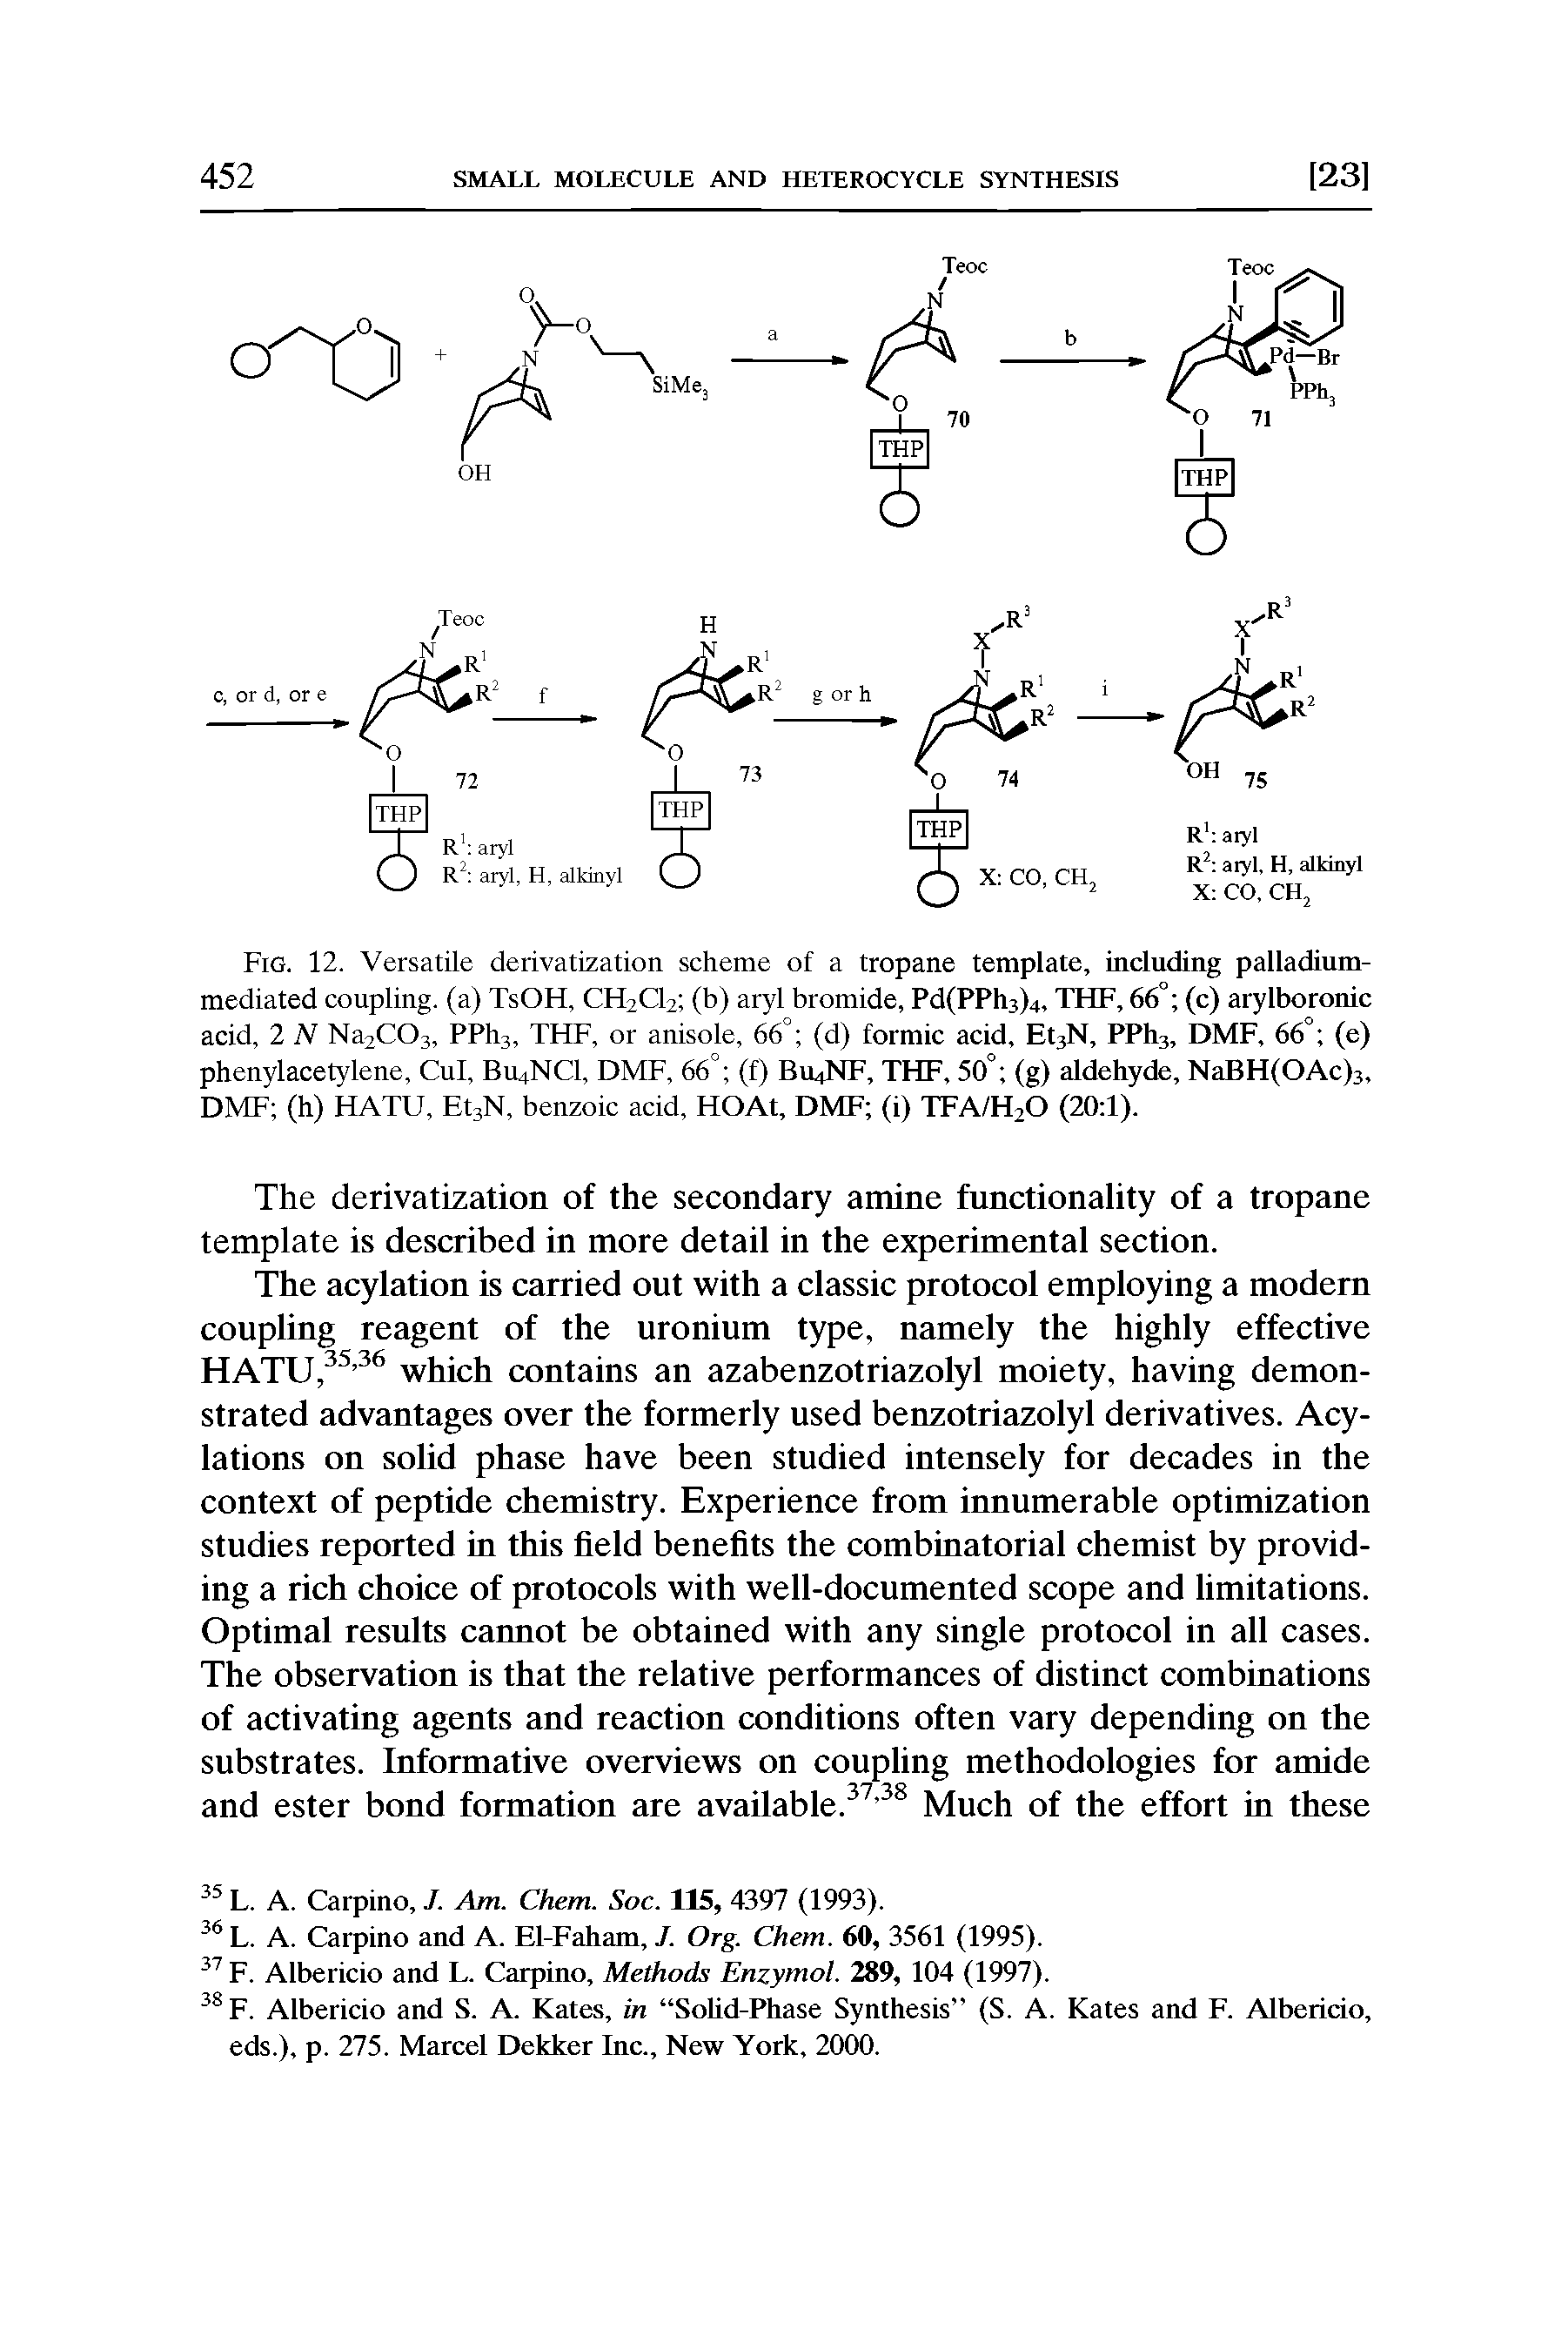 Fig. 12. Versatile derivatization scheme of a tropane template, including palladium-mediated coupling, (a) TsOH, CH2C12 (b) aryl bromide, Pd(PPh3)4, THF, 66° (c) arylboronic acid, 2 N Na2C03, PPh3, THF, or anisole, 66° (d) formic acid, Et3N, PPh3, DMF, 66° (e) phenylacetylene, Cul, B114NCI, DMF, 66° (f) B114NF, THF, 50° (g) aldehyde, NaBH(OAc)3, DMF (h) HATU, Et3N, benzoic acid, HOAt, DMF (i) TFA/H2Q (20 1).